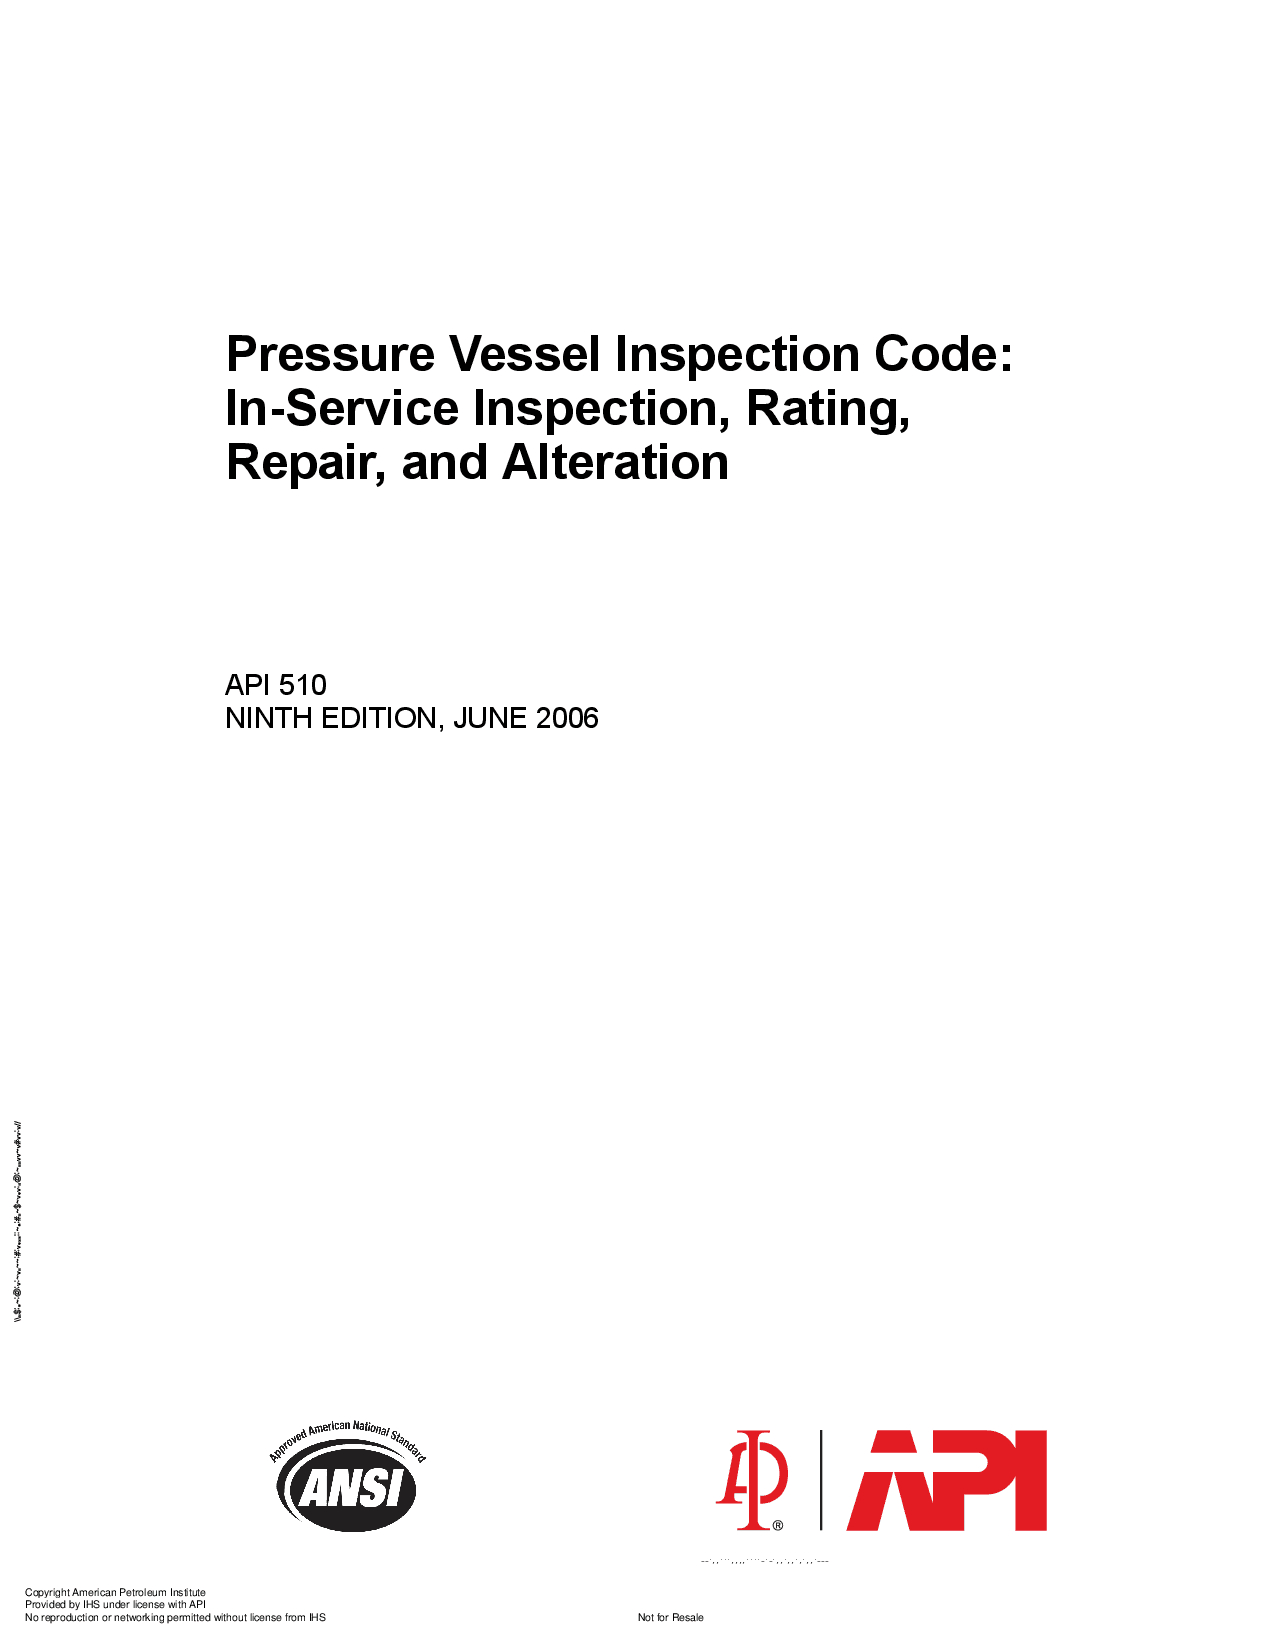 Api 510 – Pressure Vessel Inspection Code – Pressure Vessel Inside Hydrostatic Pressure Test Report Template